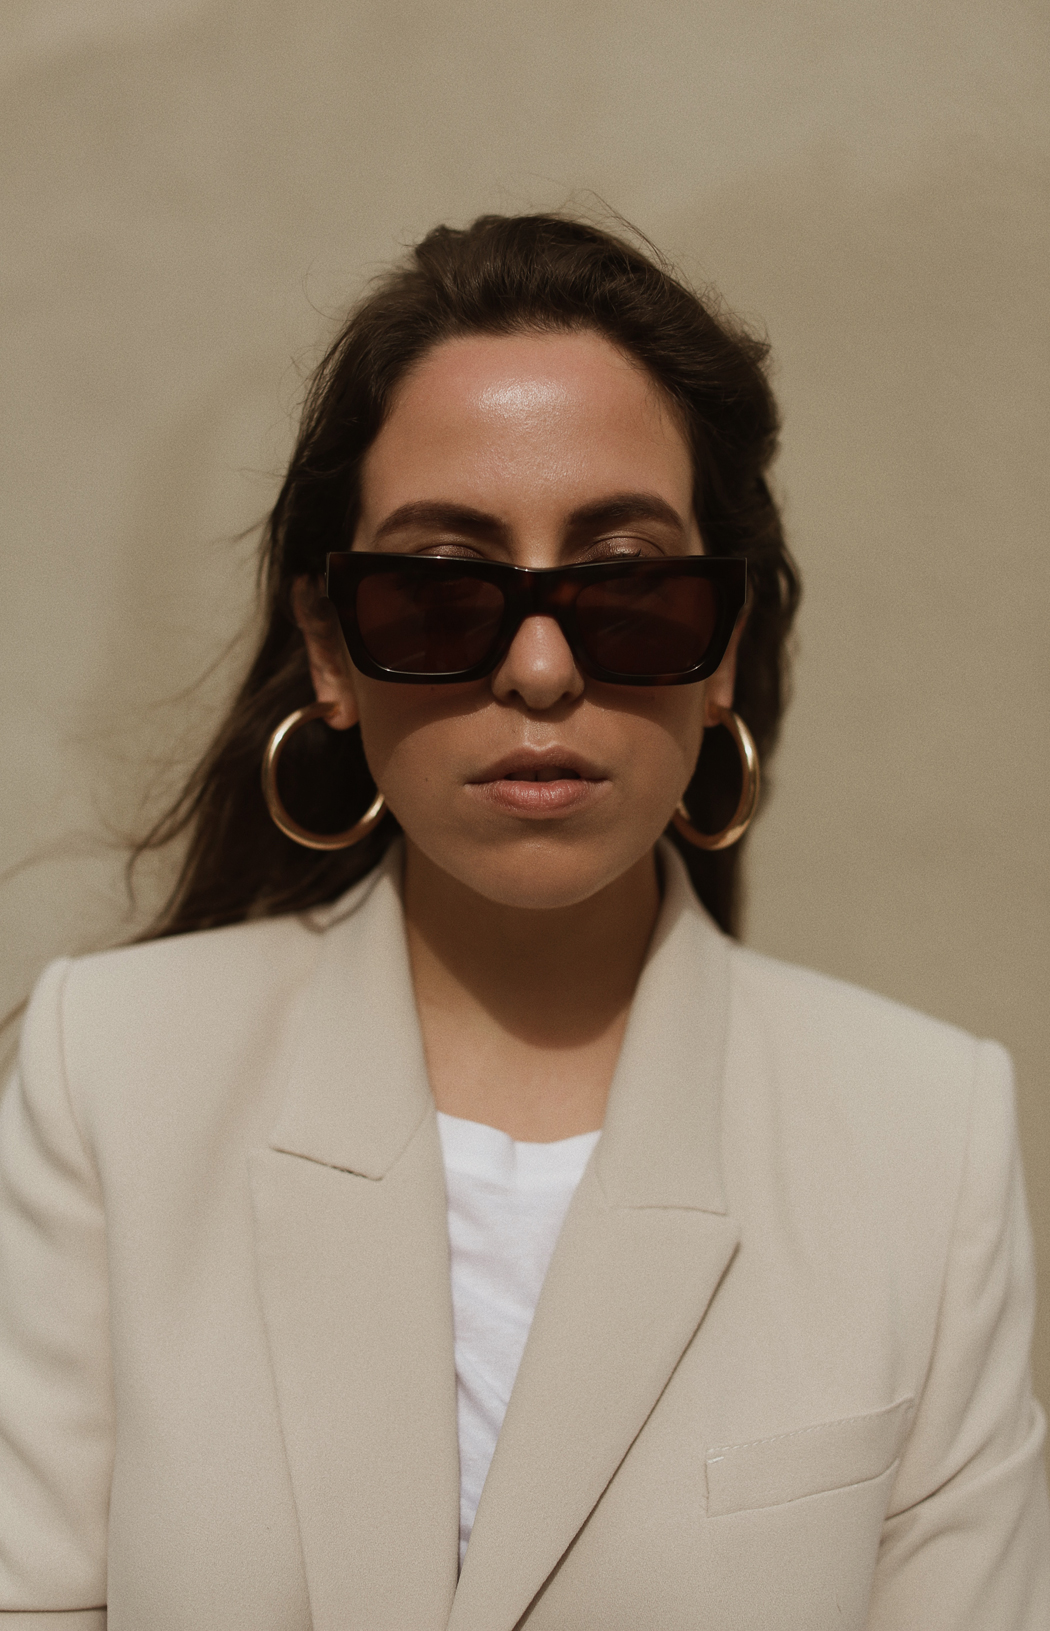 The Look - Fiona Dinkelbach Sun Buddies Greta Sunglasses Tel Aviv Outfit